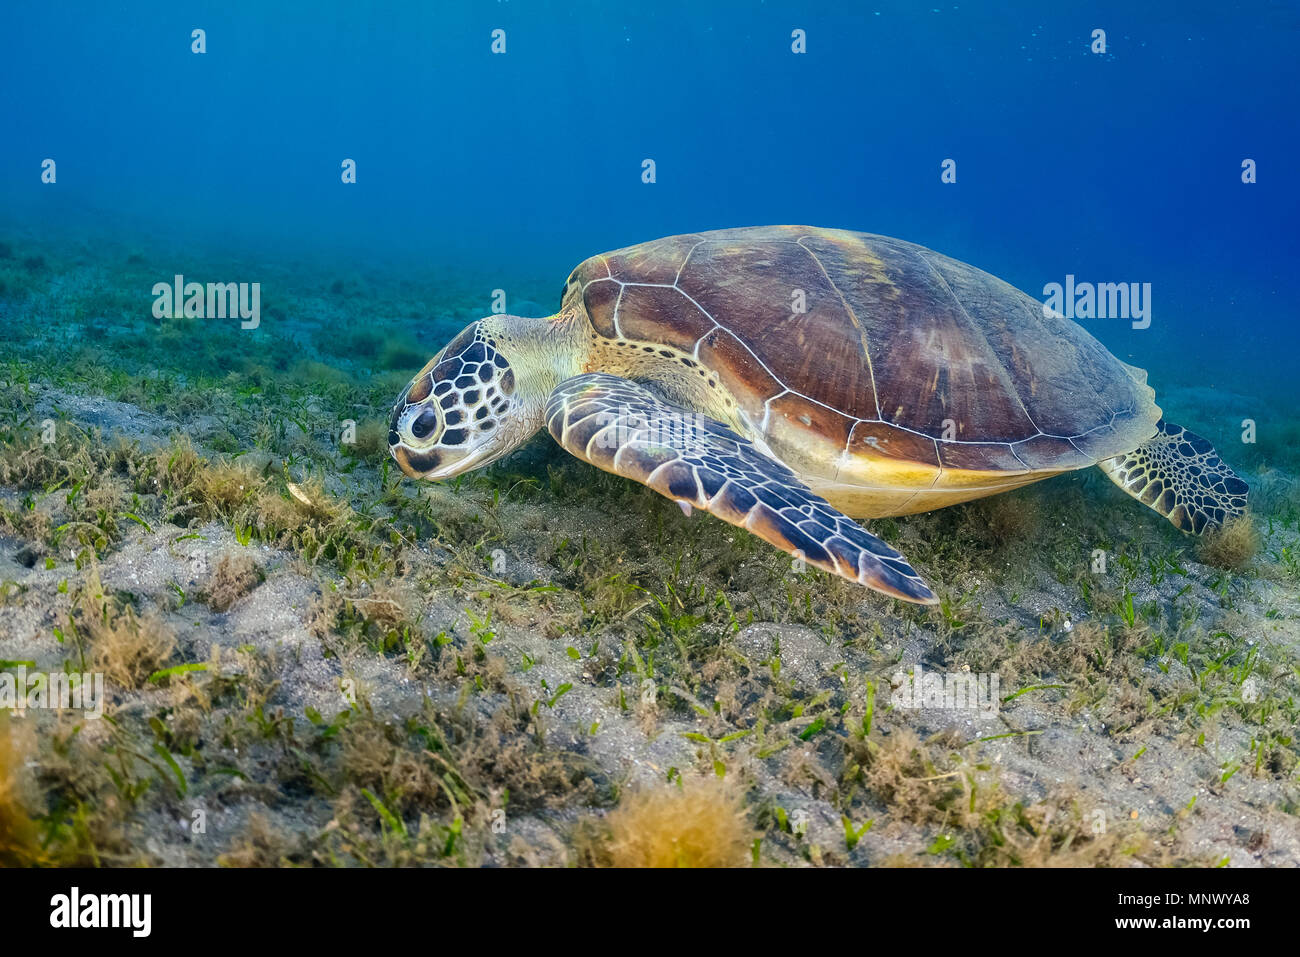 green sea turtle, Chelonia mydas, feeding, endangered species, Wadi Gimal, Marsa Alam, Egypt, Red Sea, Indian Ocean Stock Photo